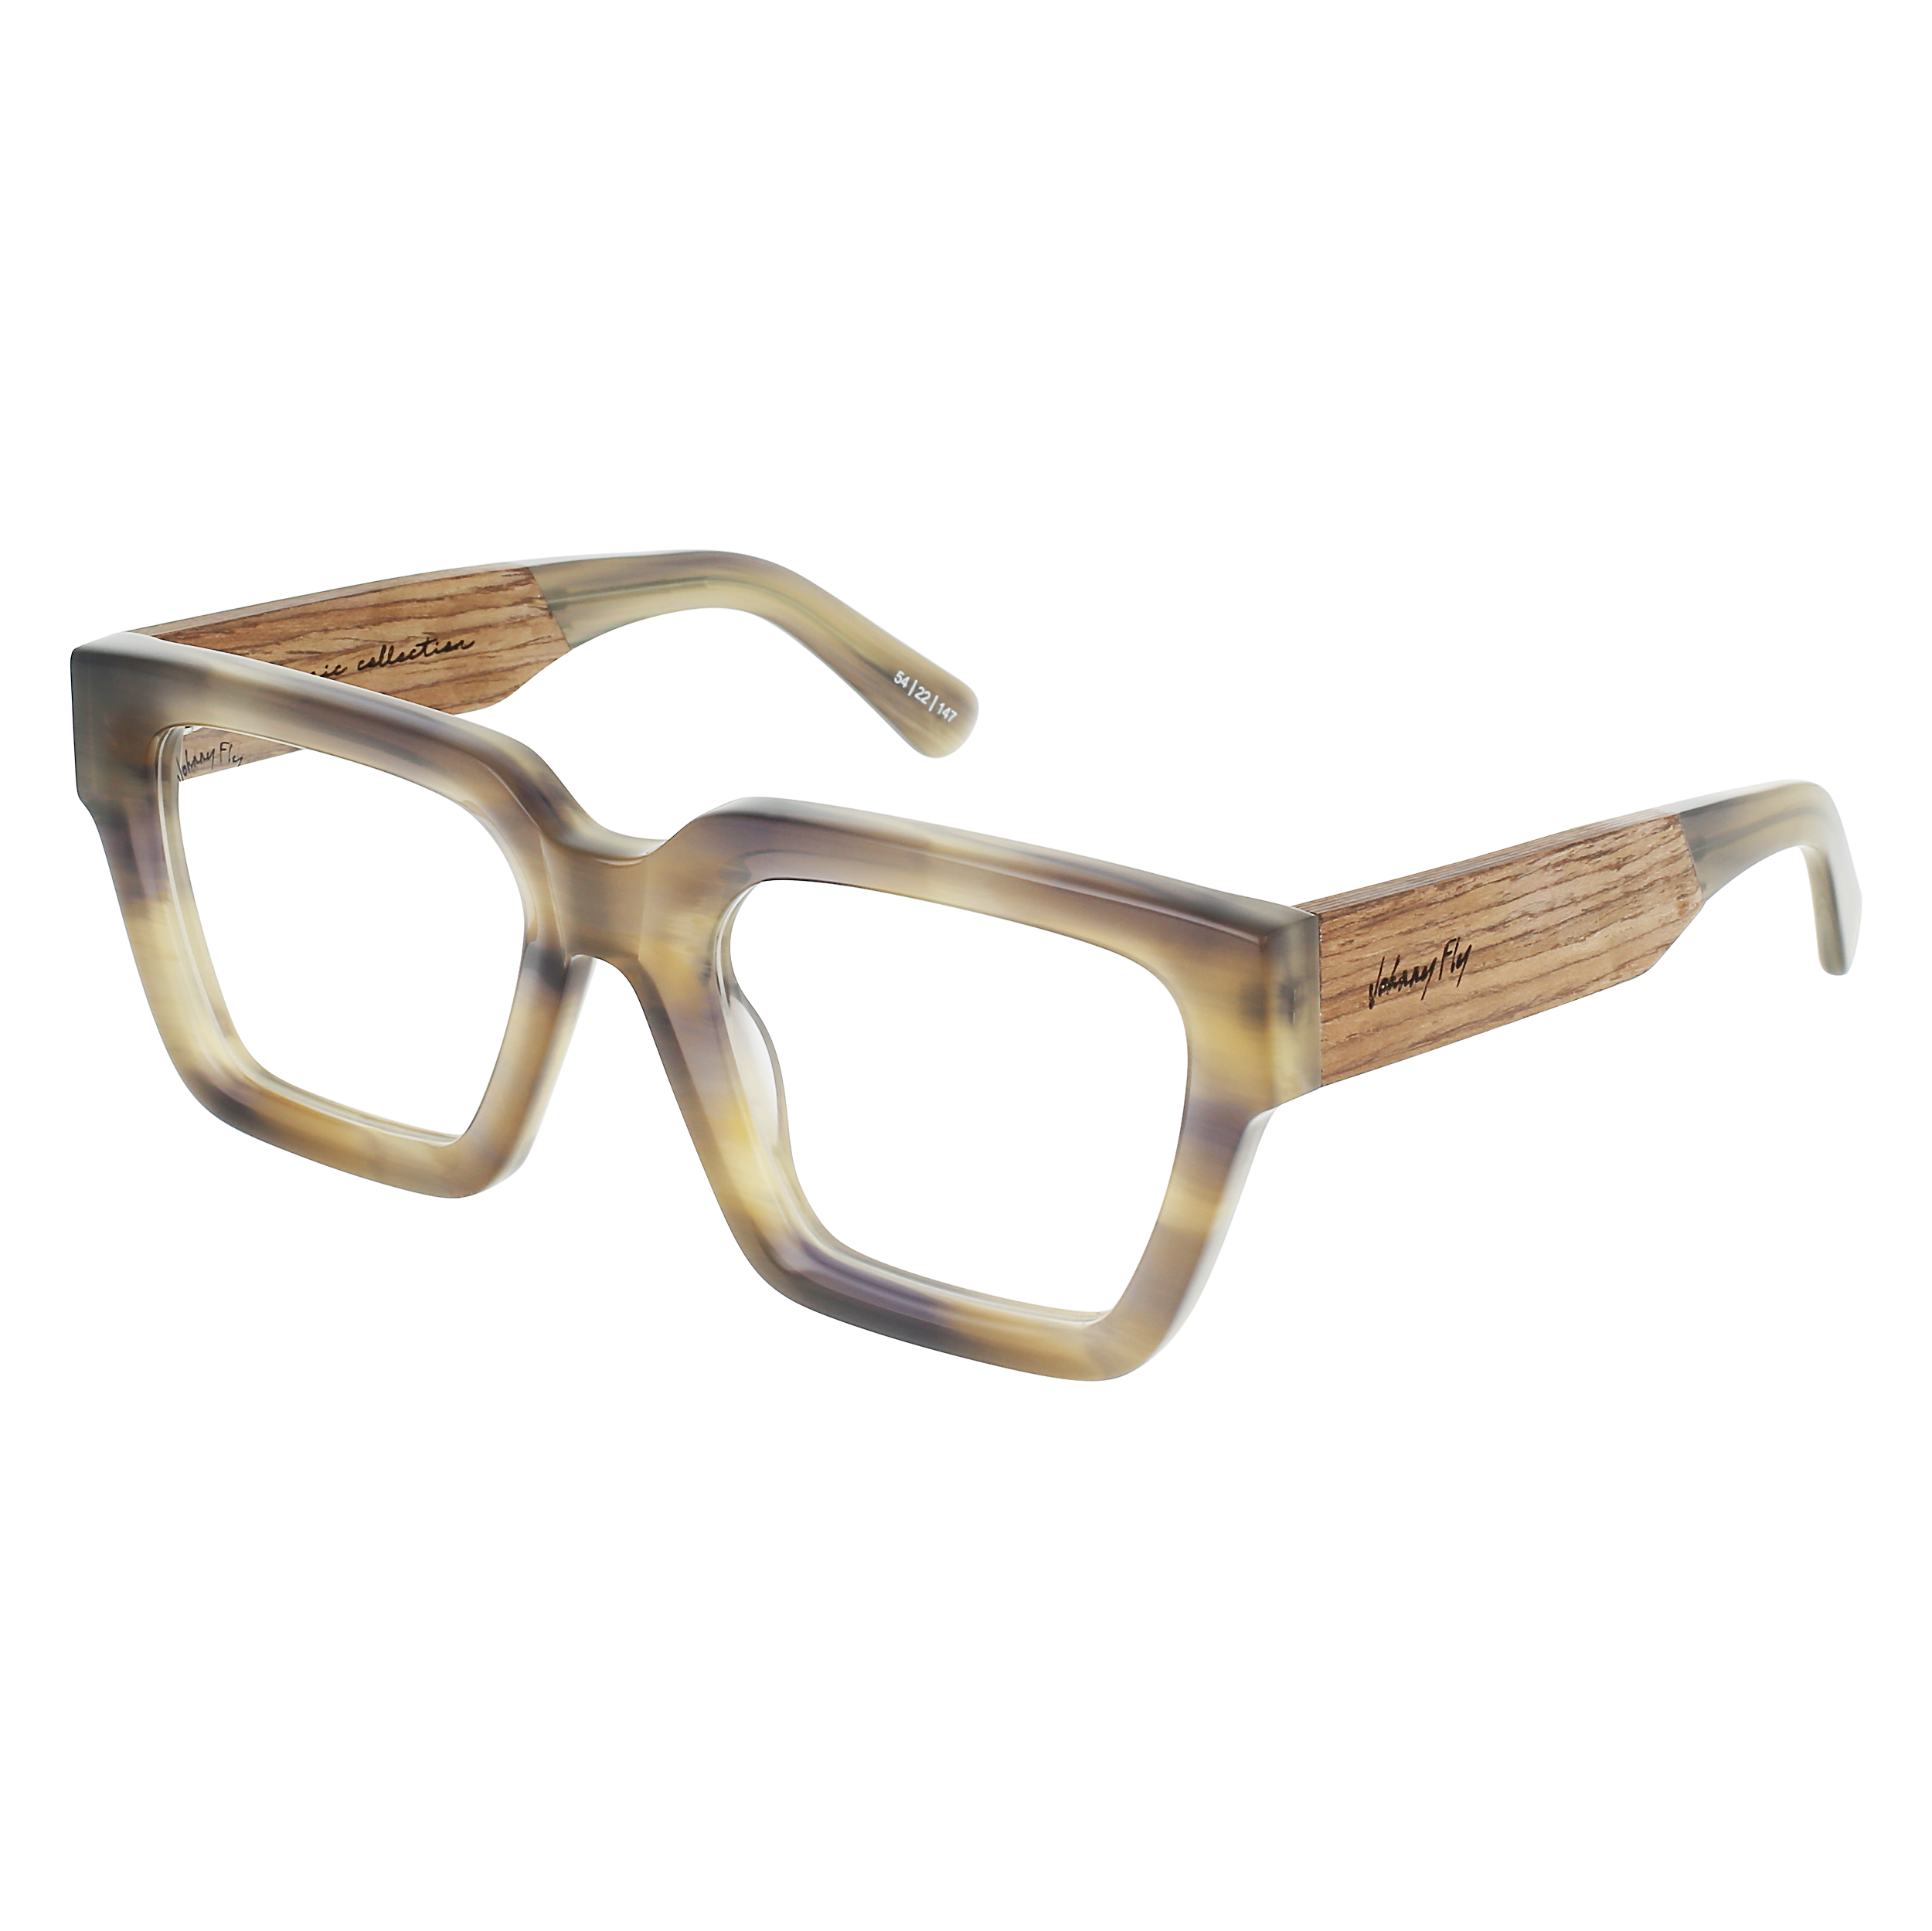 FAME Eyeglasses Frame - Sahara- Johnny Fly | FAM-SAR-FRAME | | 